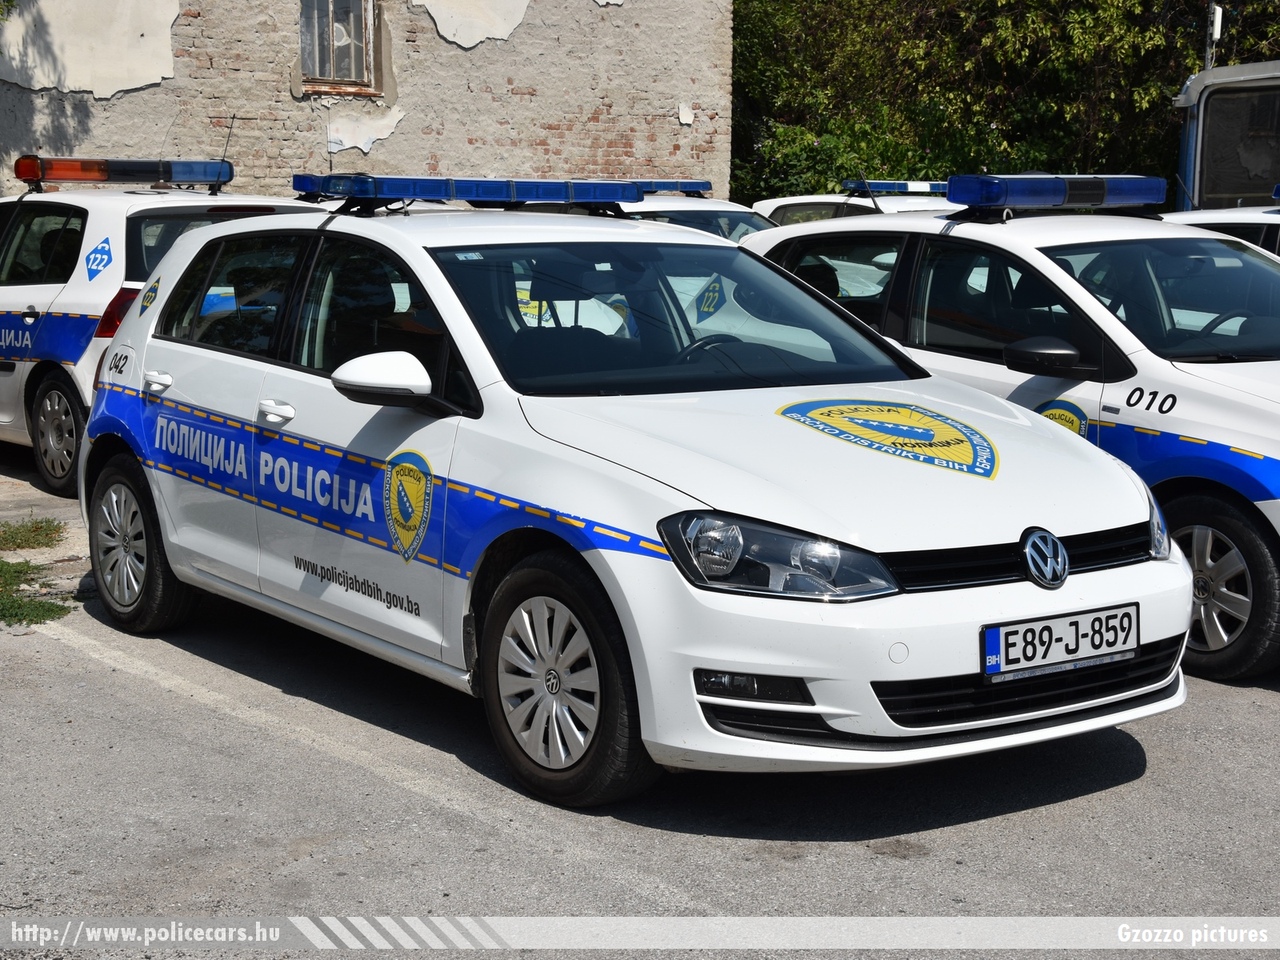 Volkswagen Golf VII, Brcko, fotó: Gzozzo pictures
Keywords: Bosznia-Hercegovina rendőr rendőrautó rendőrség bosnia bosnia-herzegovina police policecar